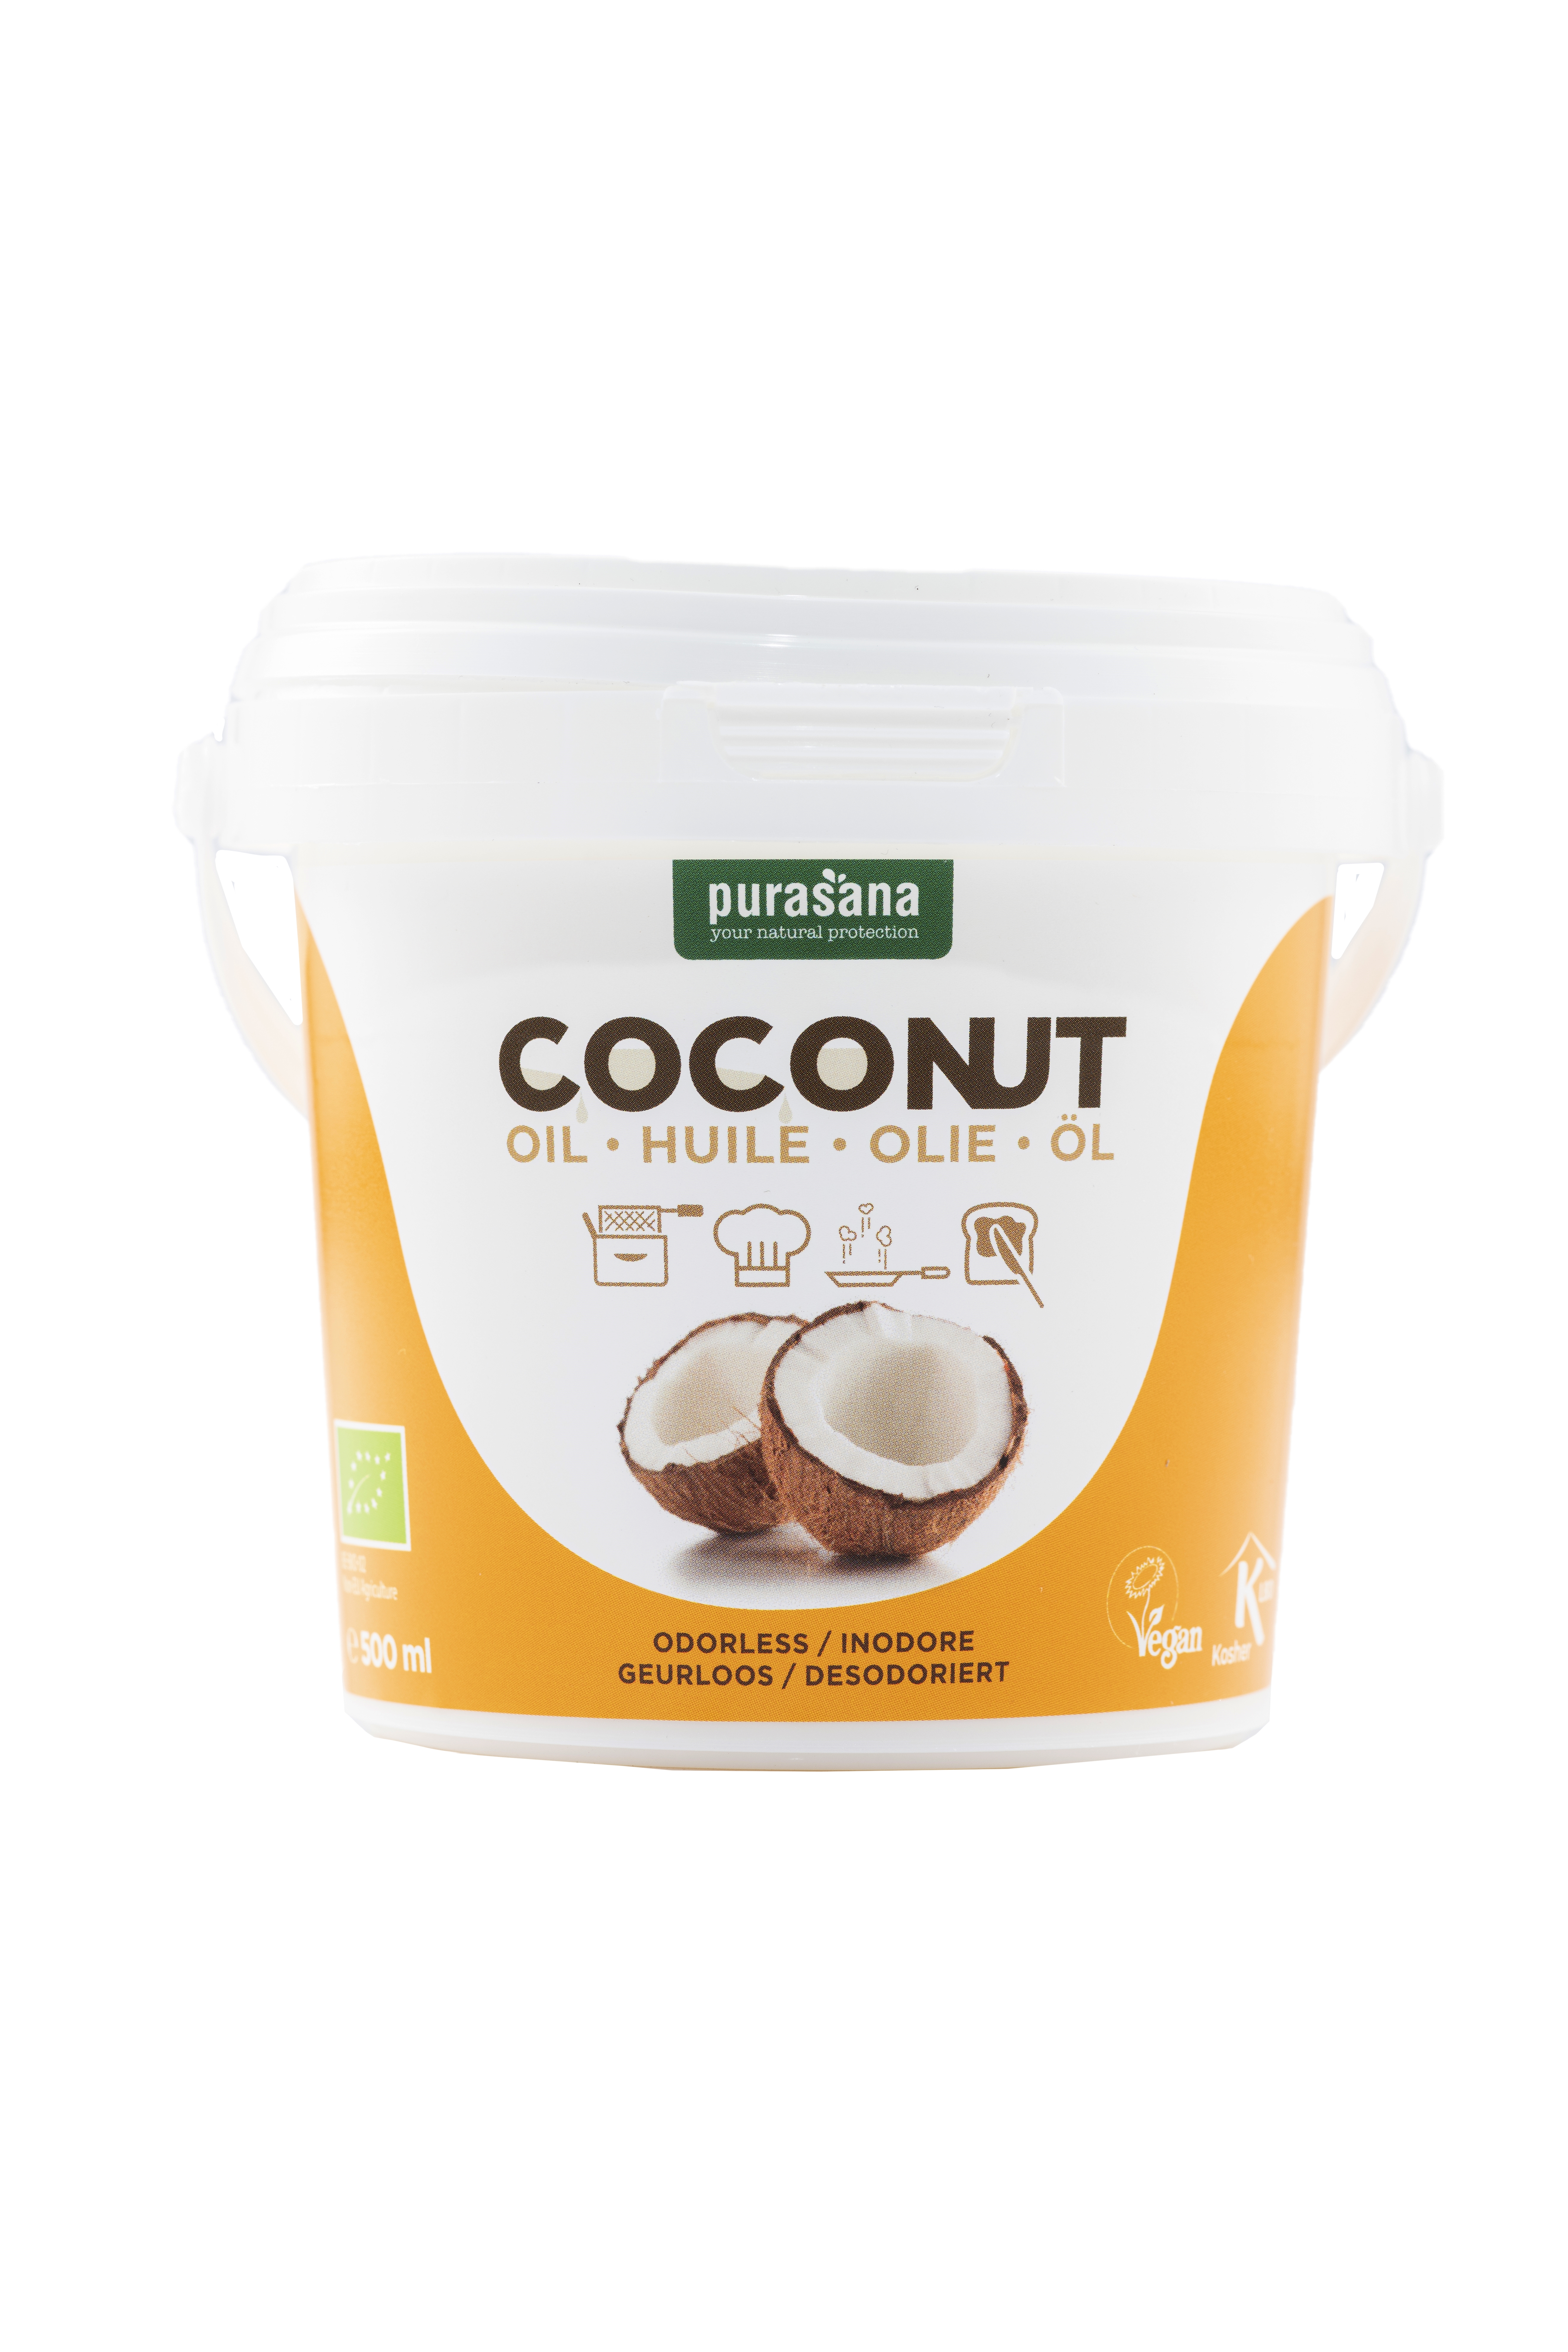 ik ben trots vice versa behandeling Ontgeurde kokosolie bestellen? | Purasana ontgeurde kokosolie Purasana 500  ml